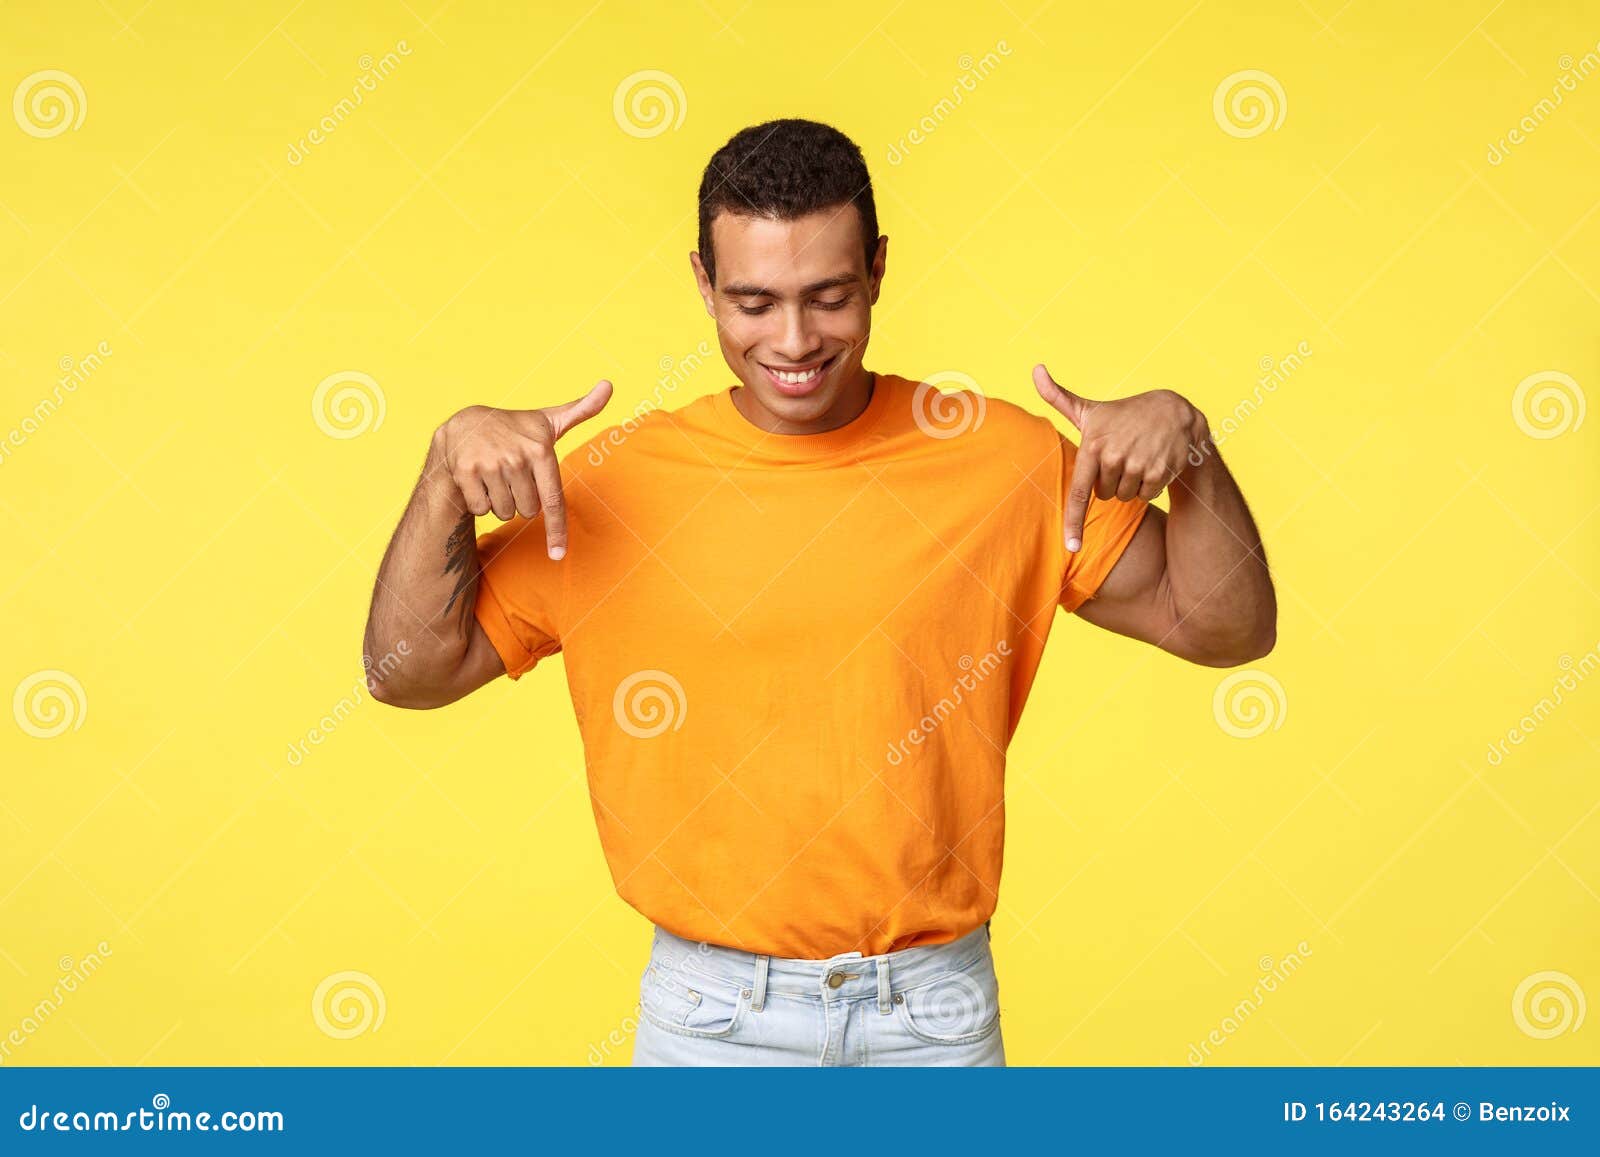 orange t shirt guy